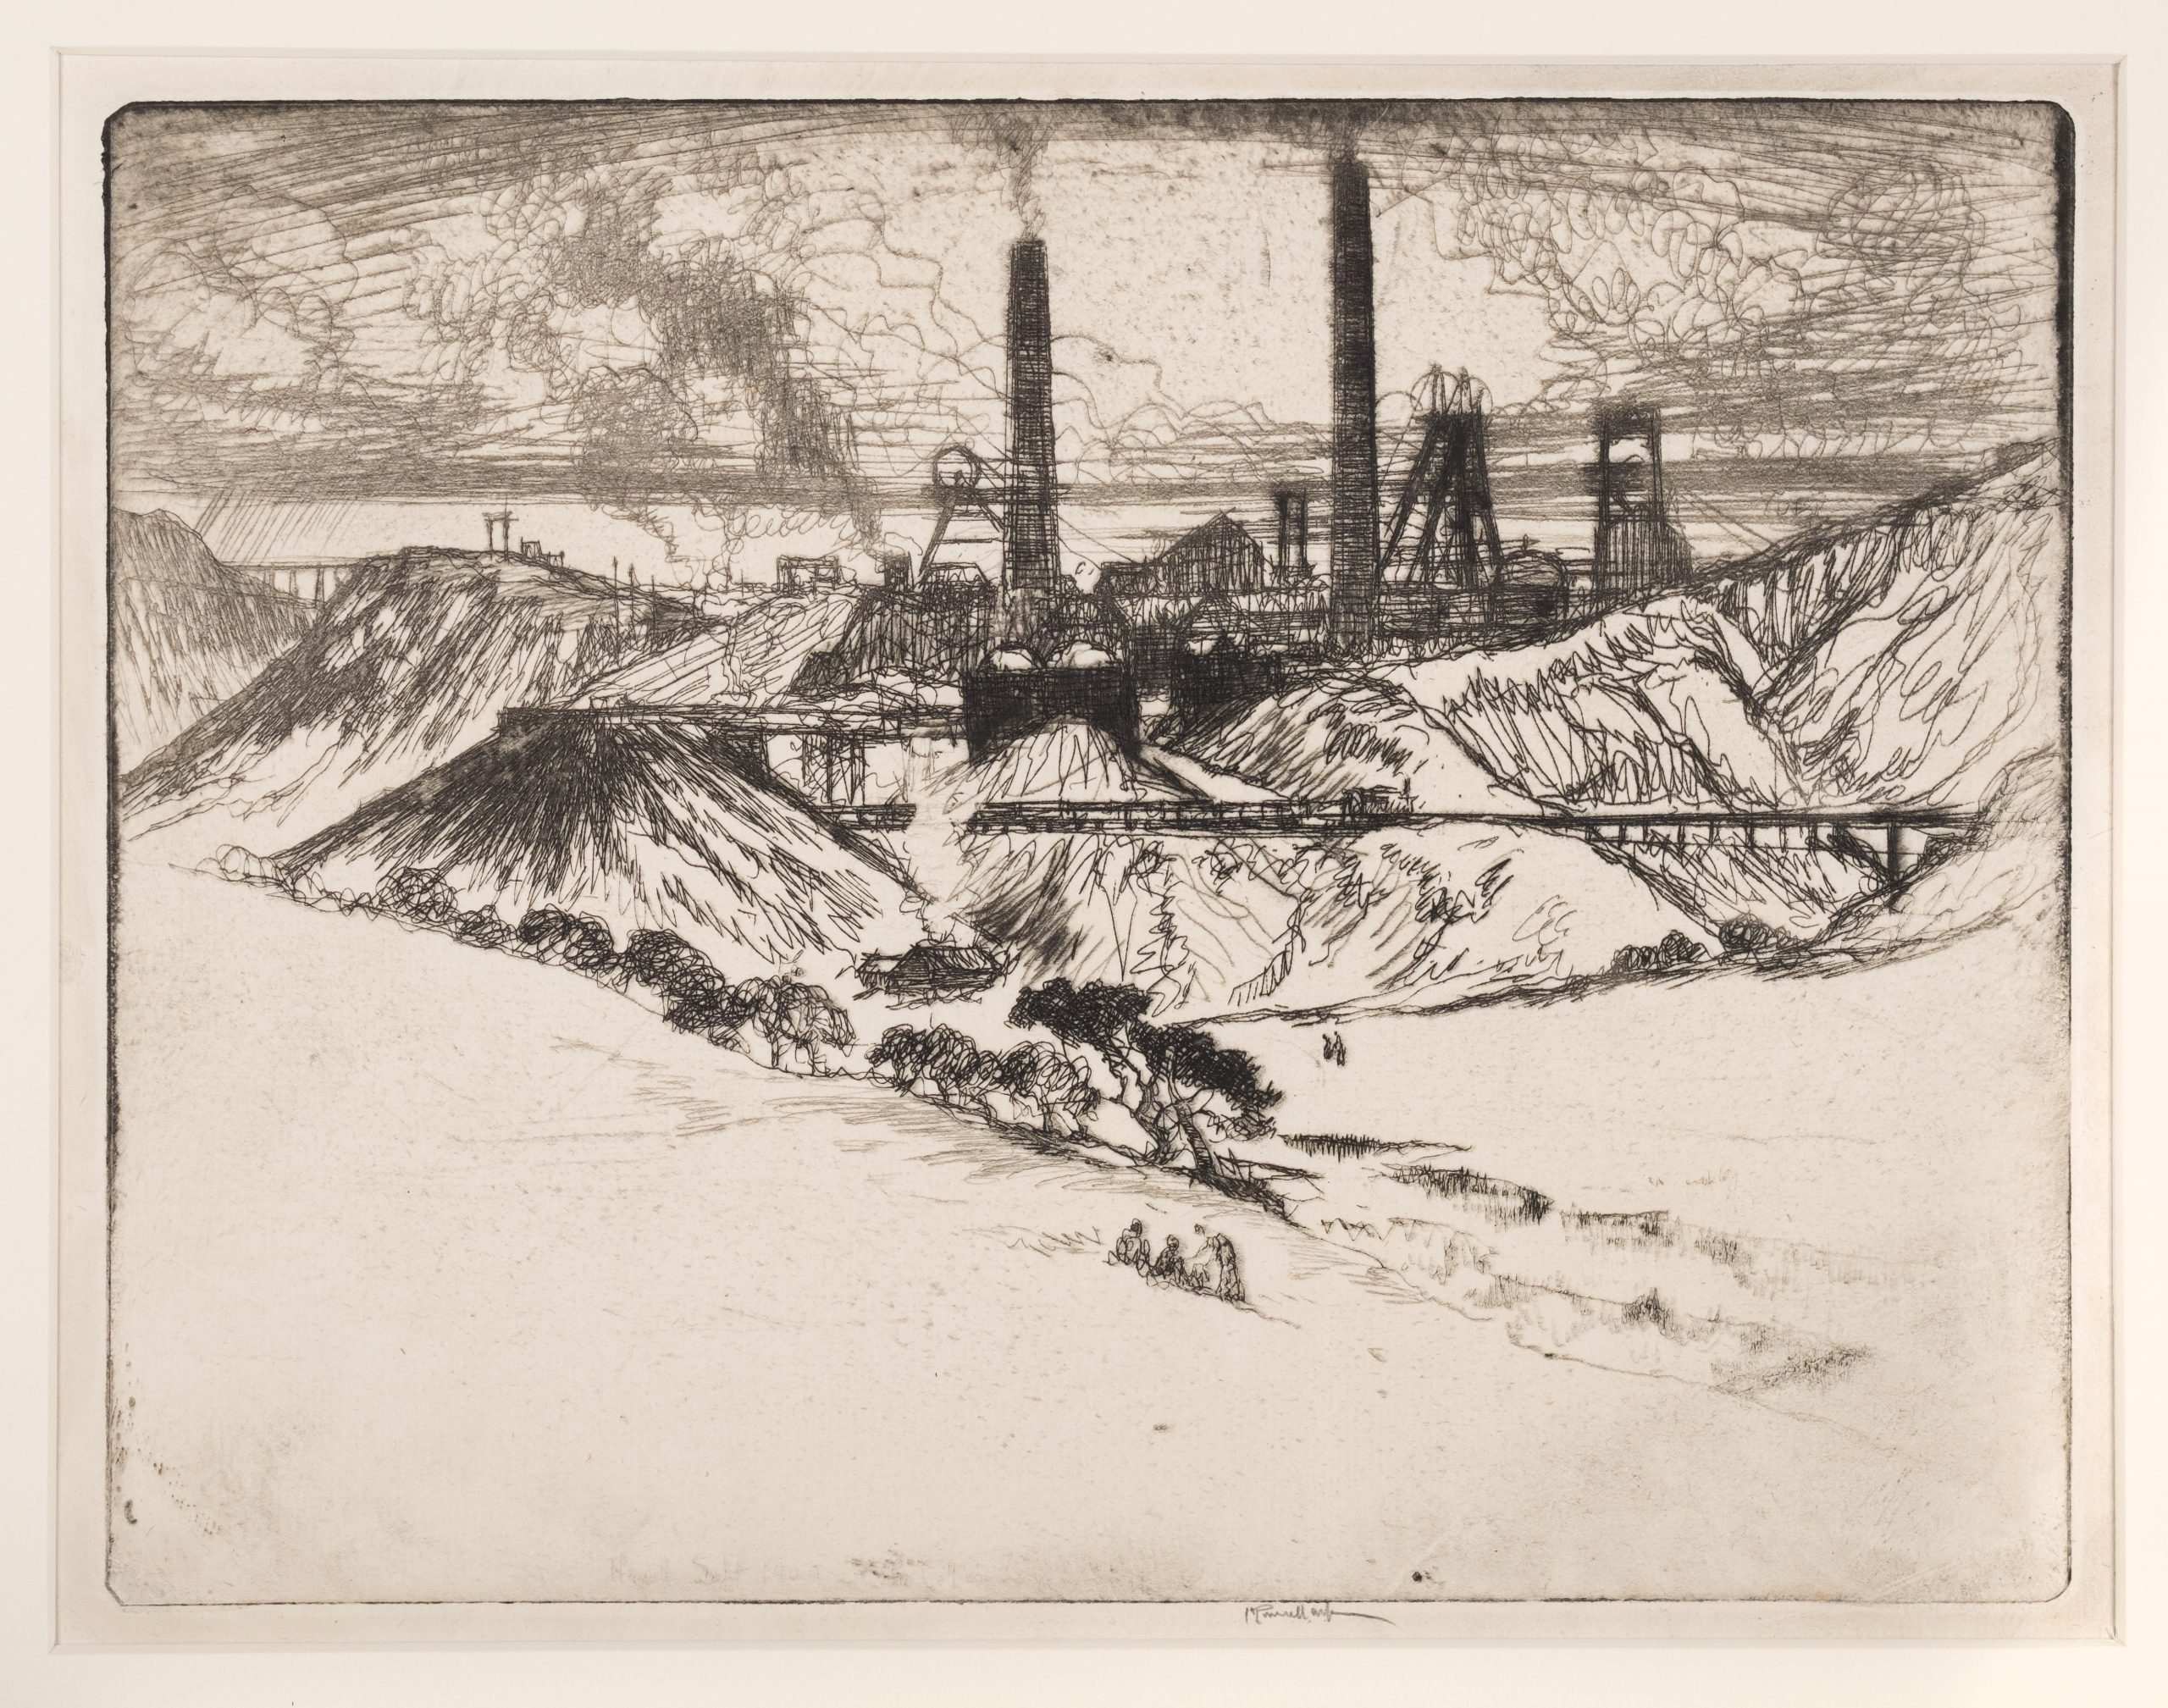 Joseph Pennell, Coal Mine, Longport